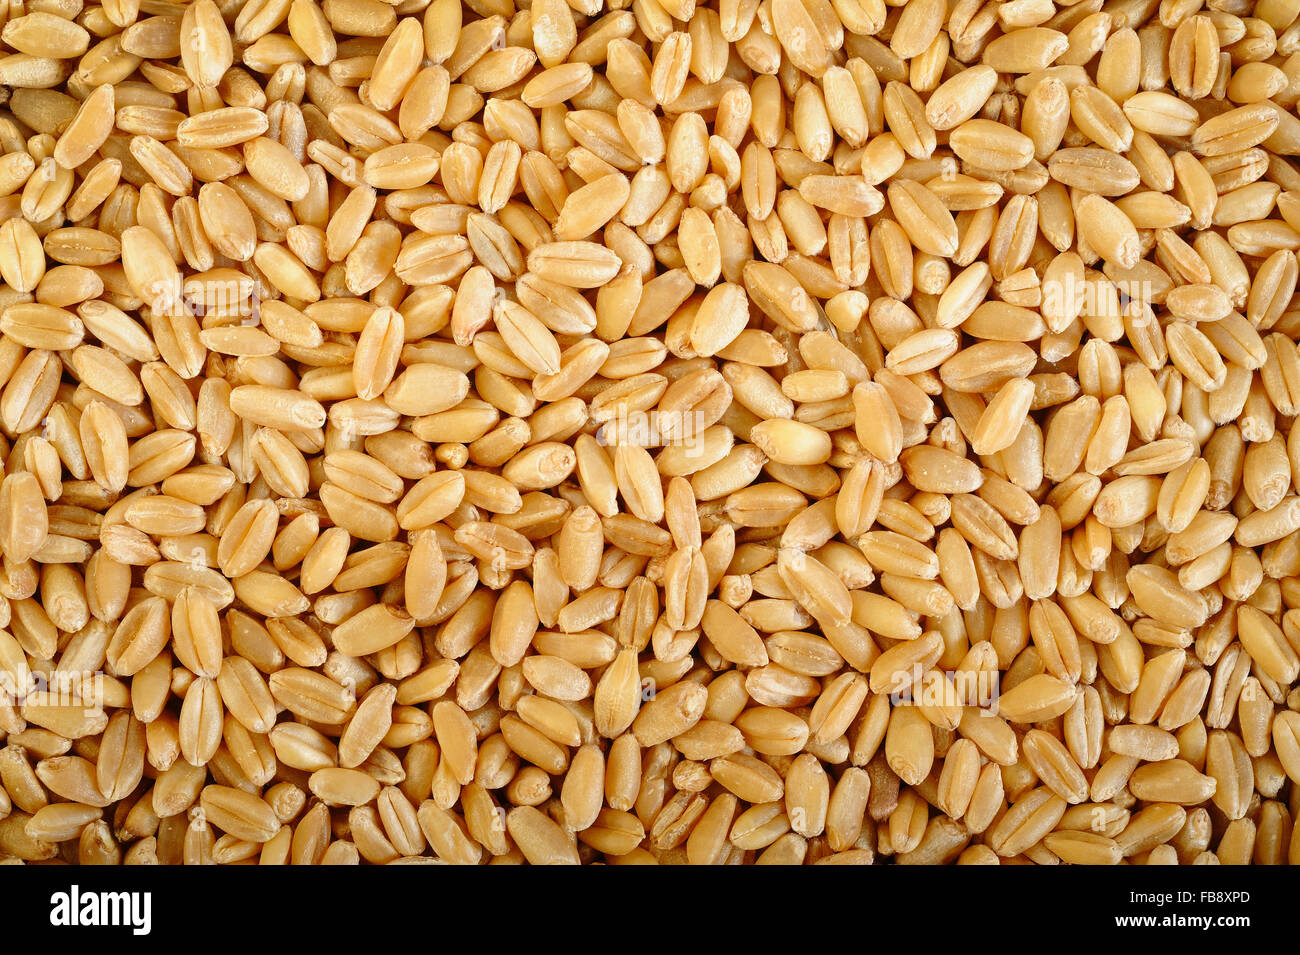 pearl barley grains background Stock Photo